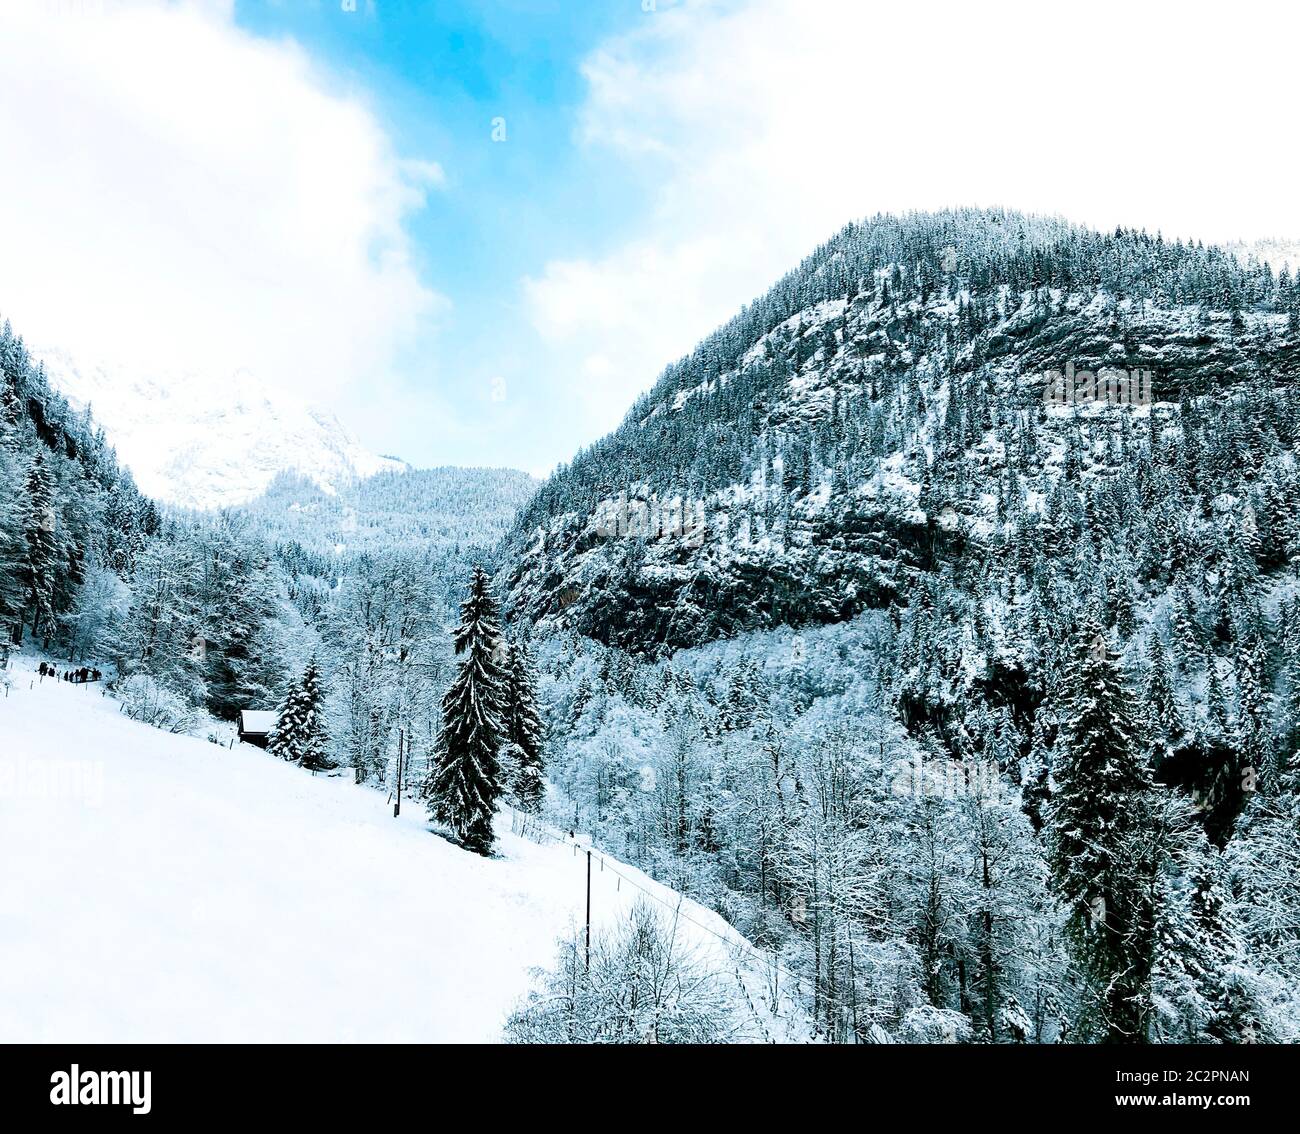 Hallstatt dreamscape winter snow mountain landscape outdoor adventure with blue sky in snowy day, Austria Stock Photo